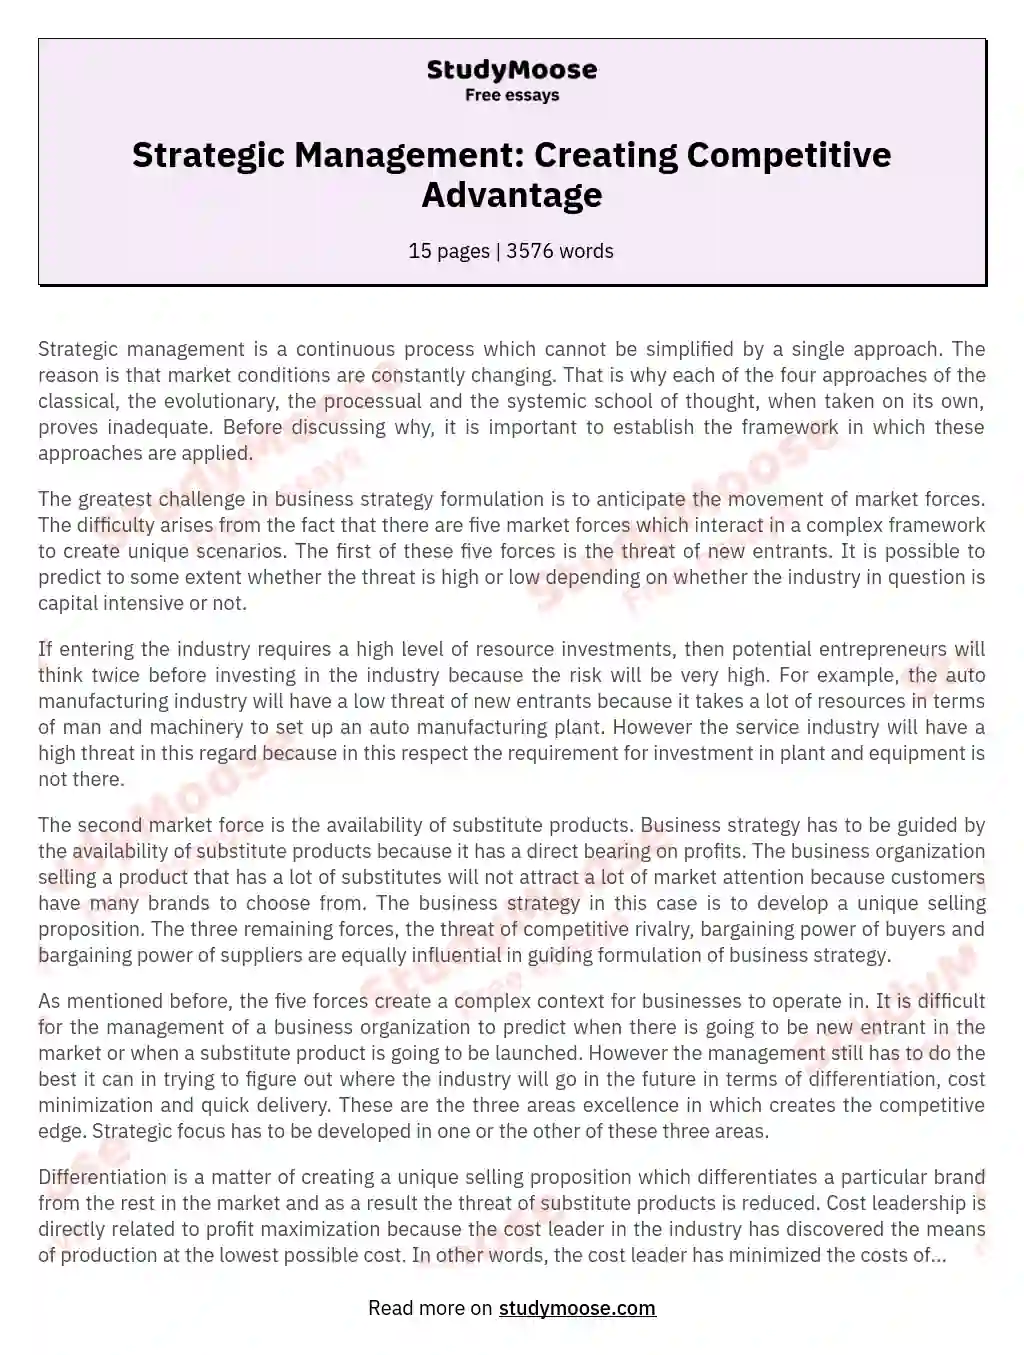 Strategic Management: Creating Competitive Advantage essay